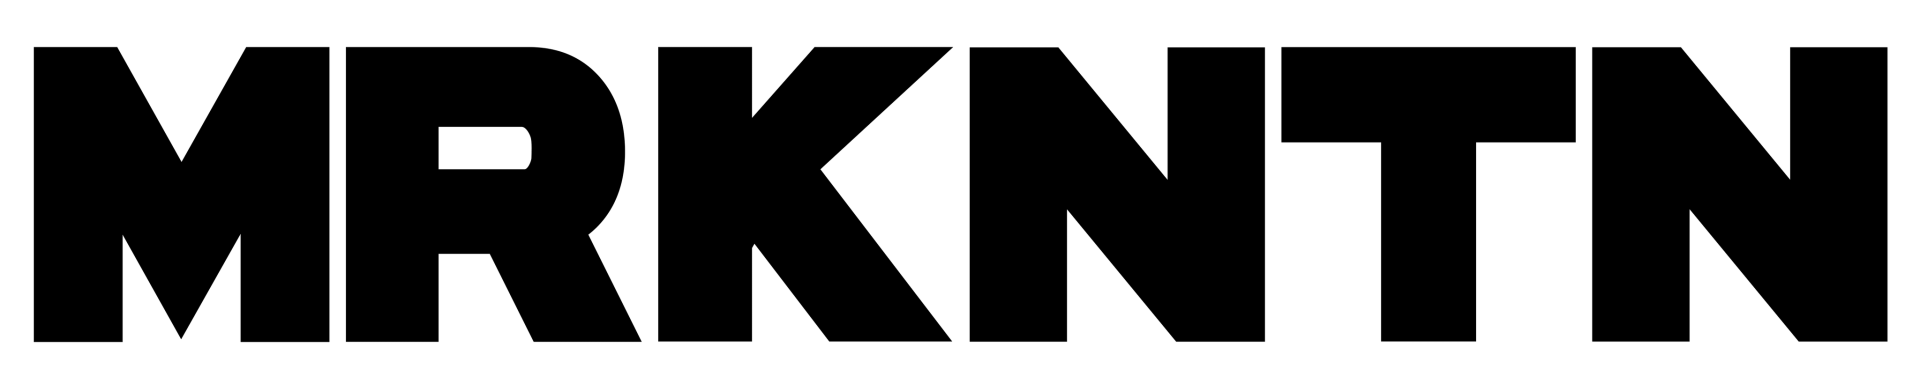 MRKNTN logo